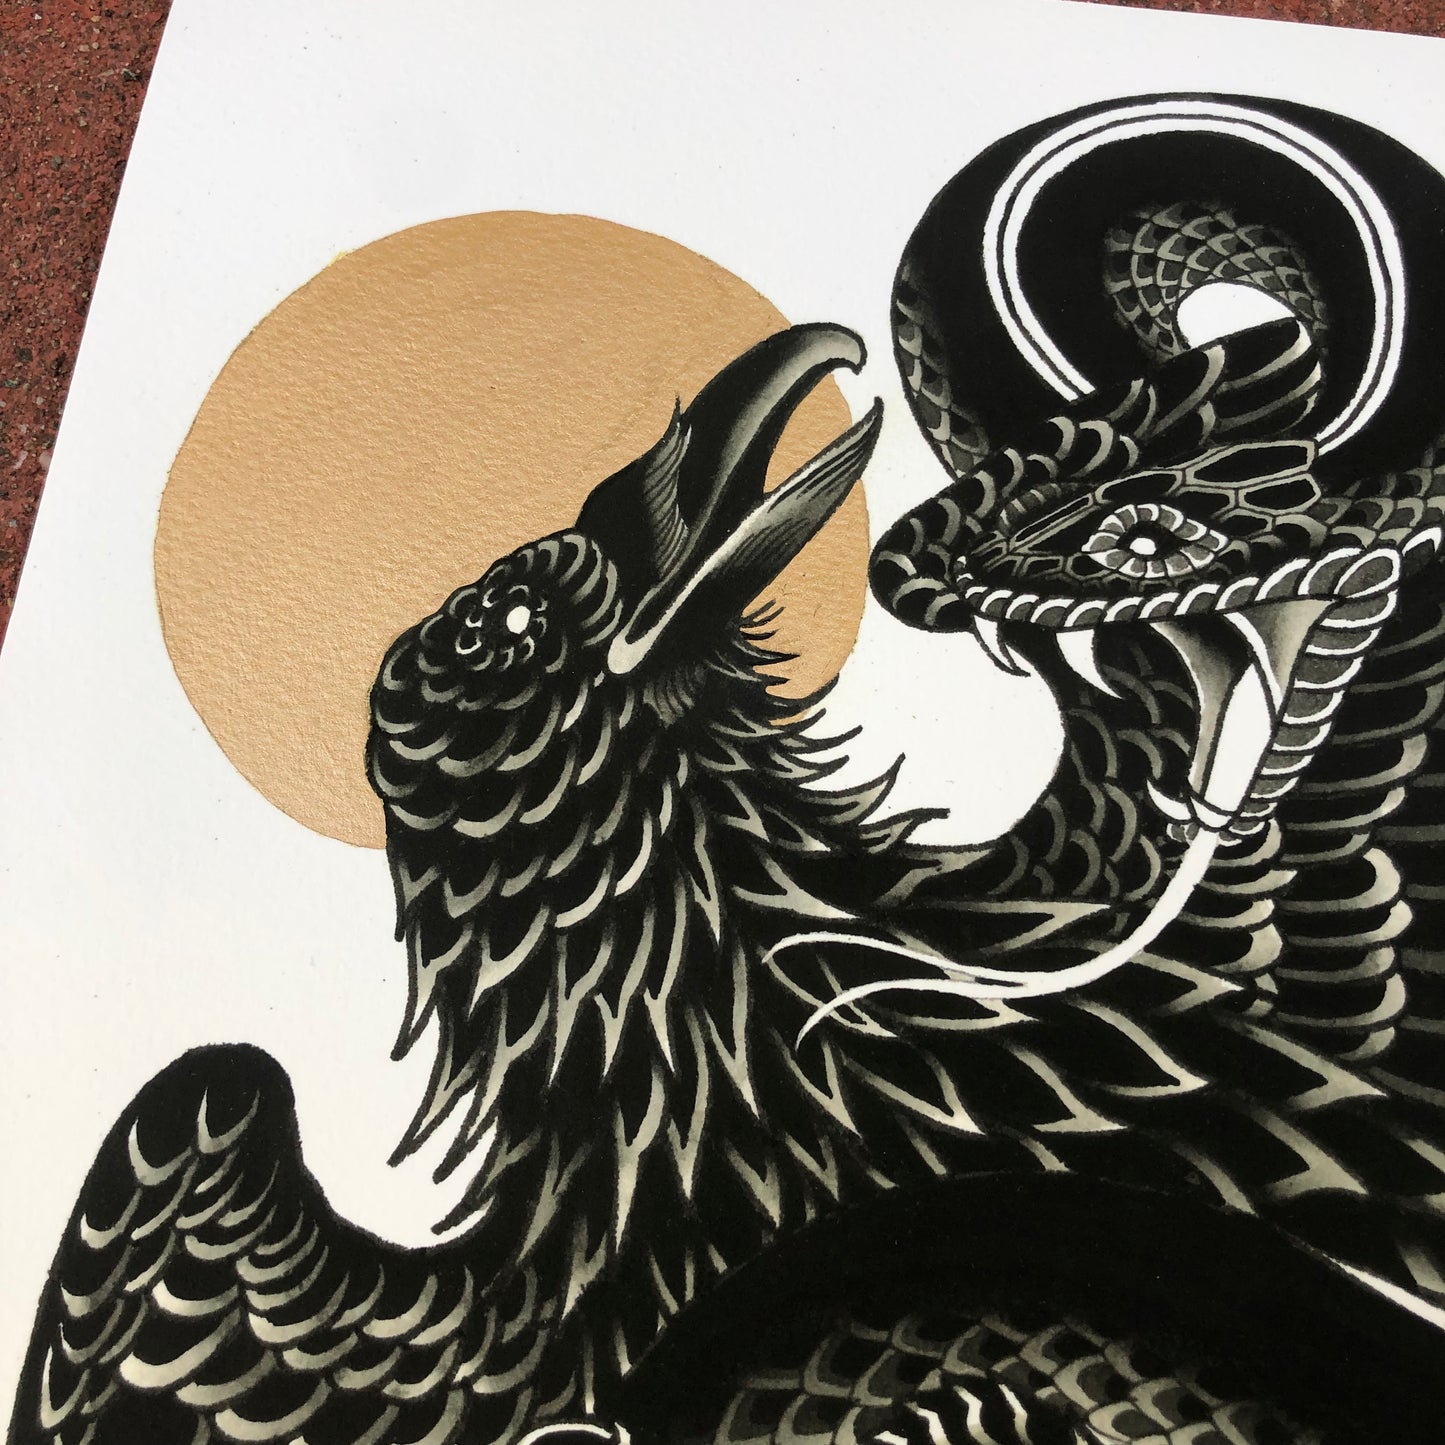 Phil Geck "Crow and Snake" Print (2021)